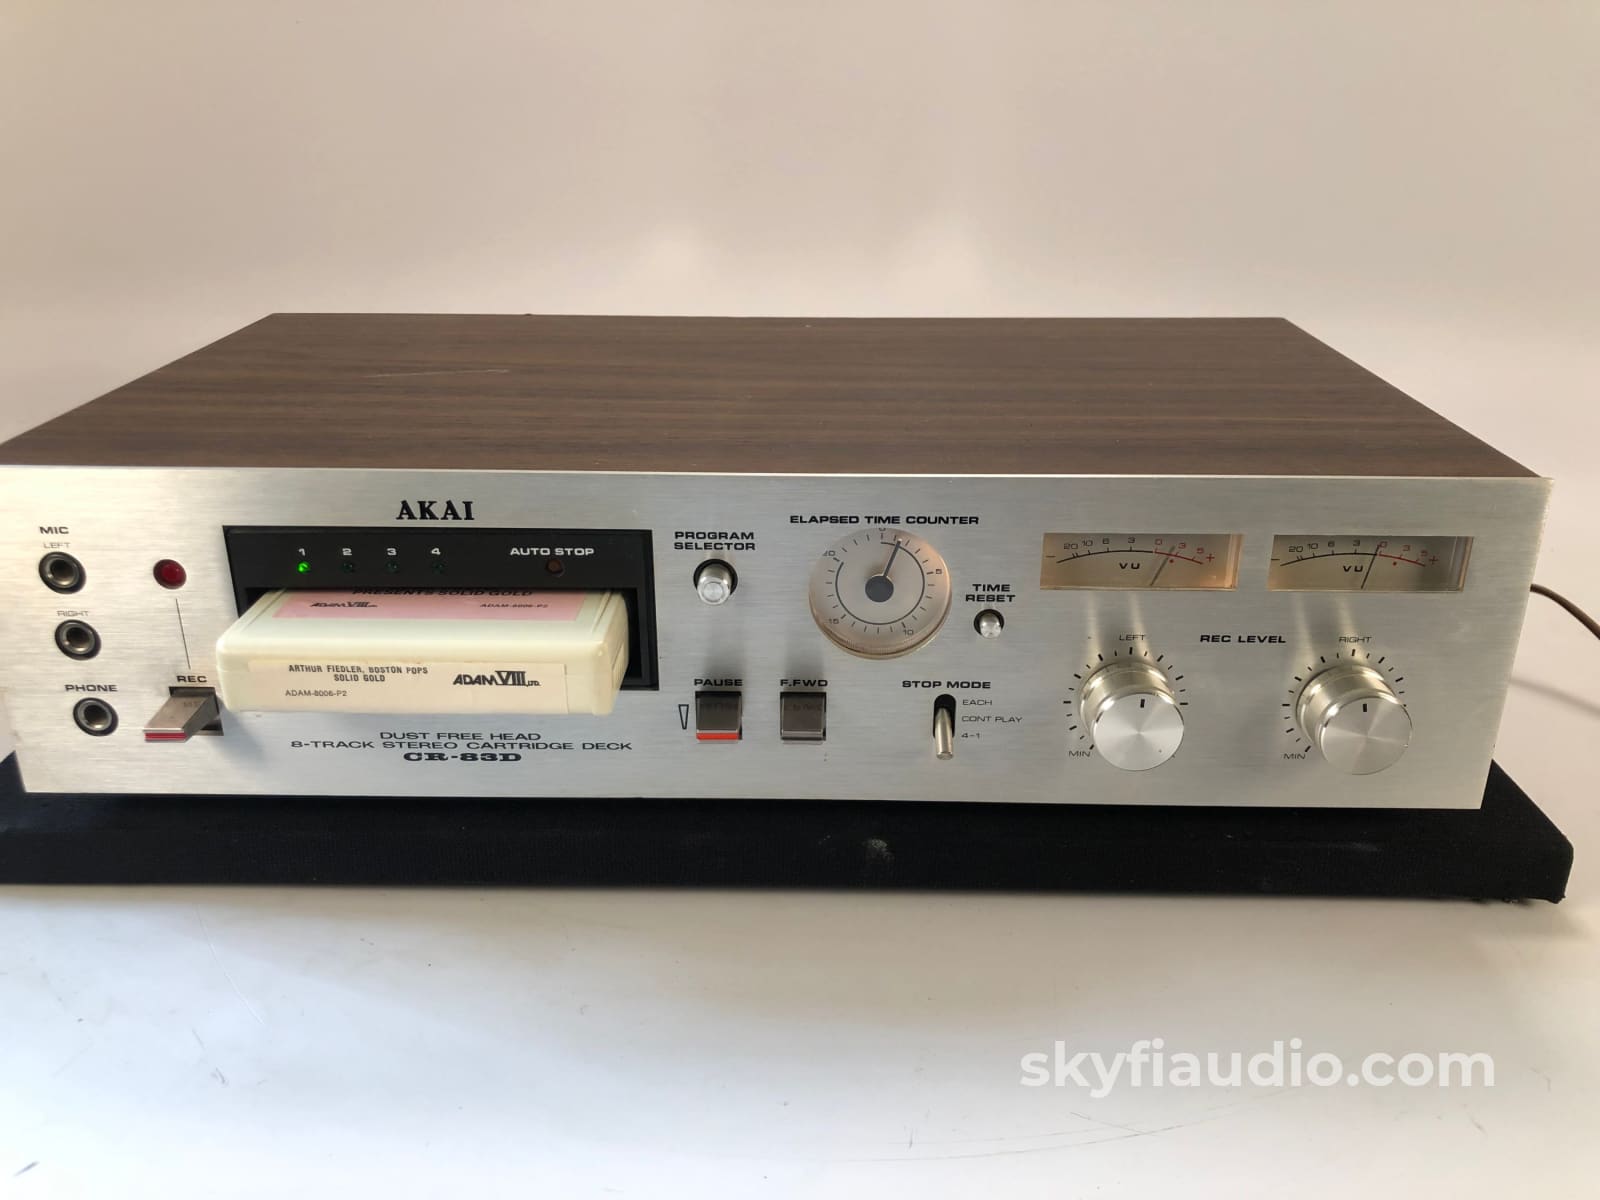 Akai Cr-83D 8-Track Tape Player - Cool Retro Piece! Deck